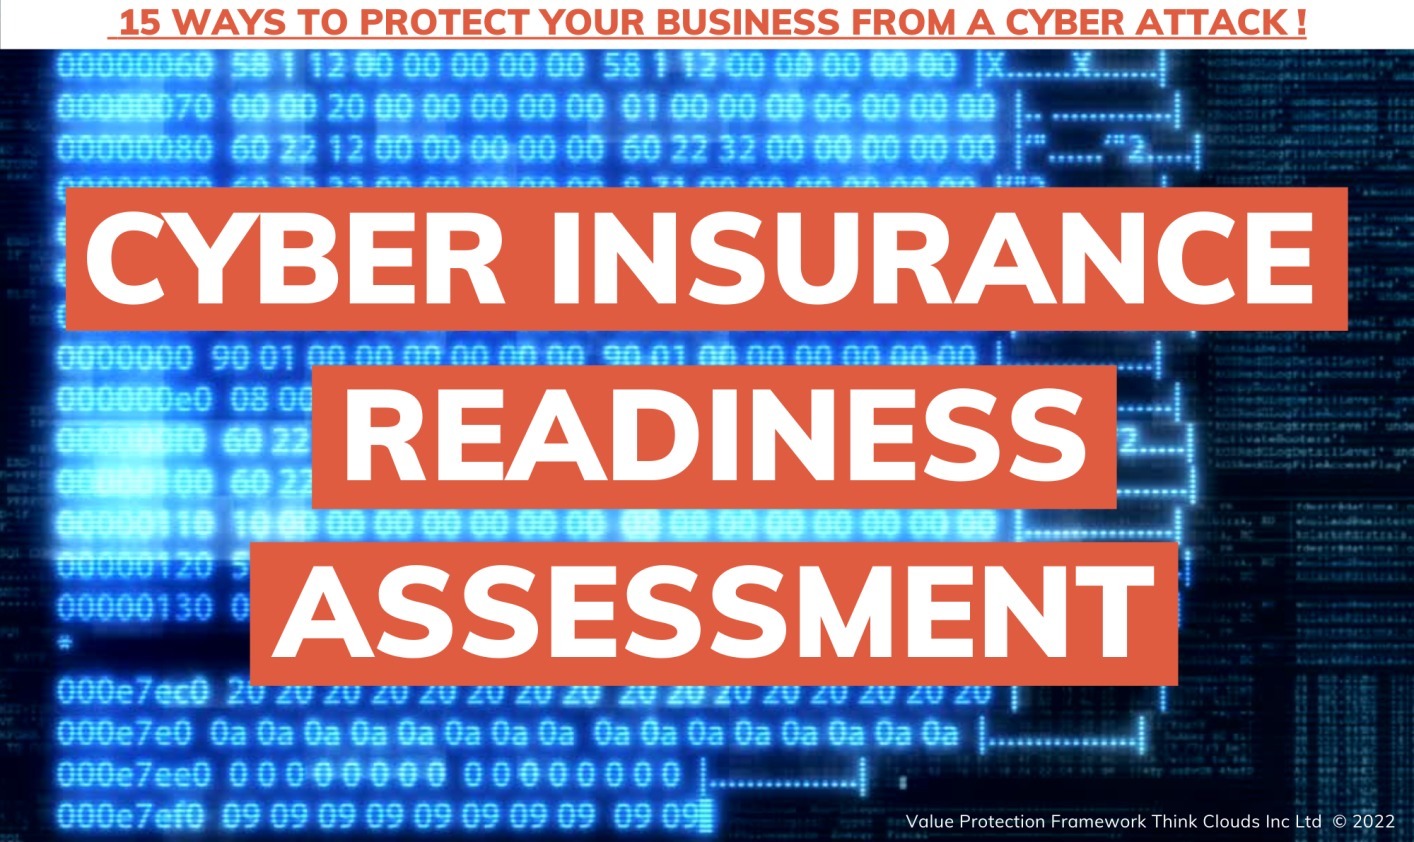 Cyber insurance readiness assessment